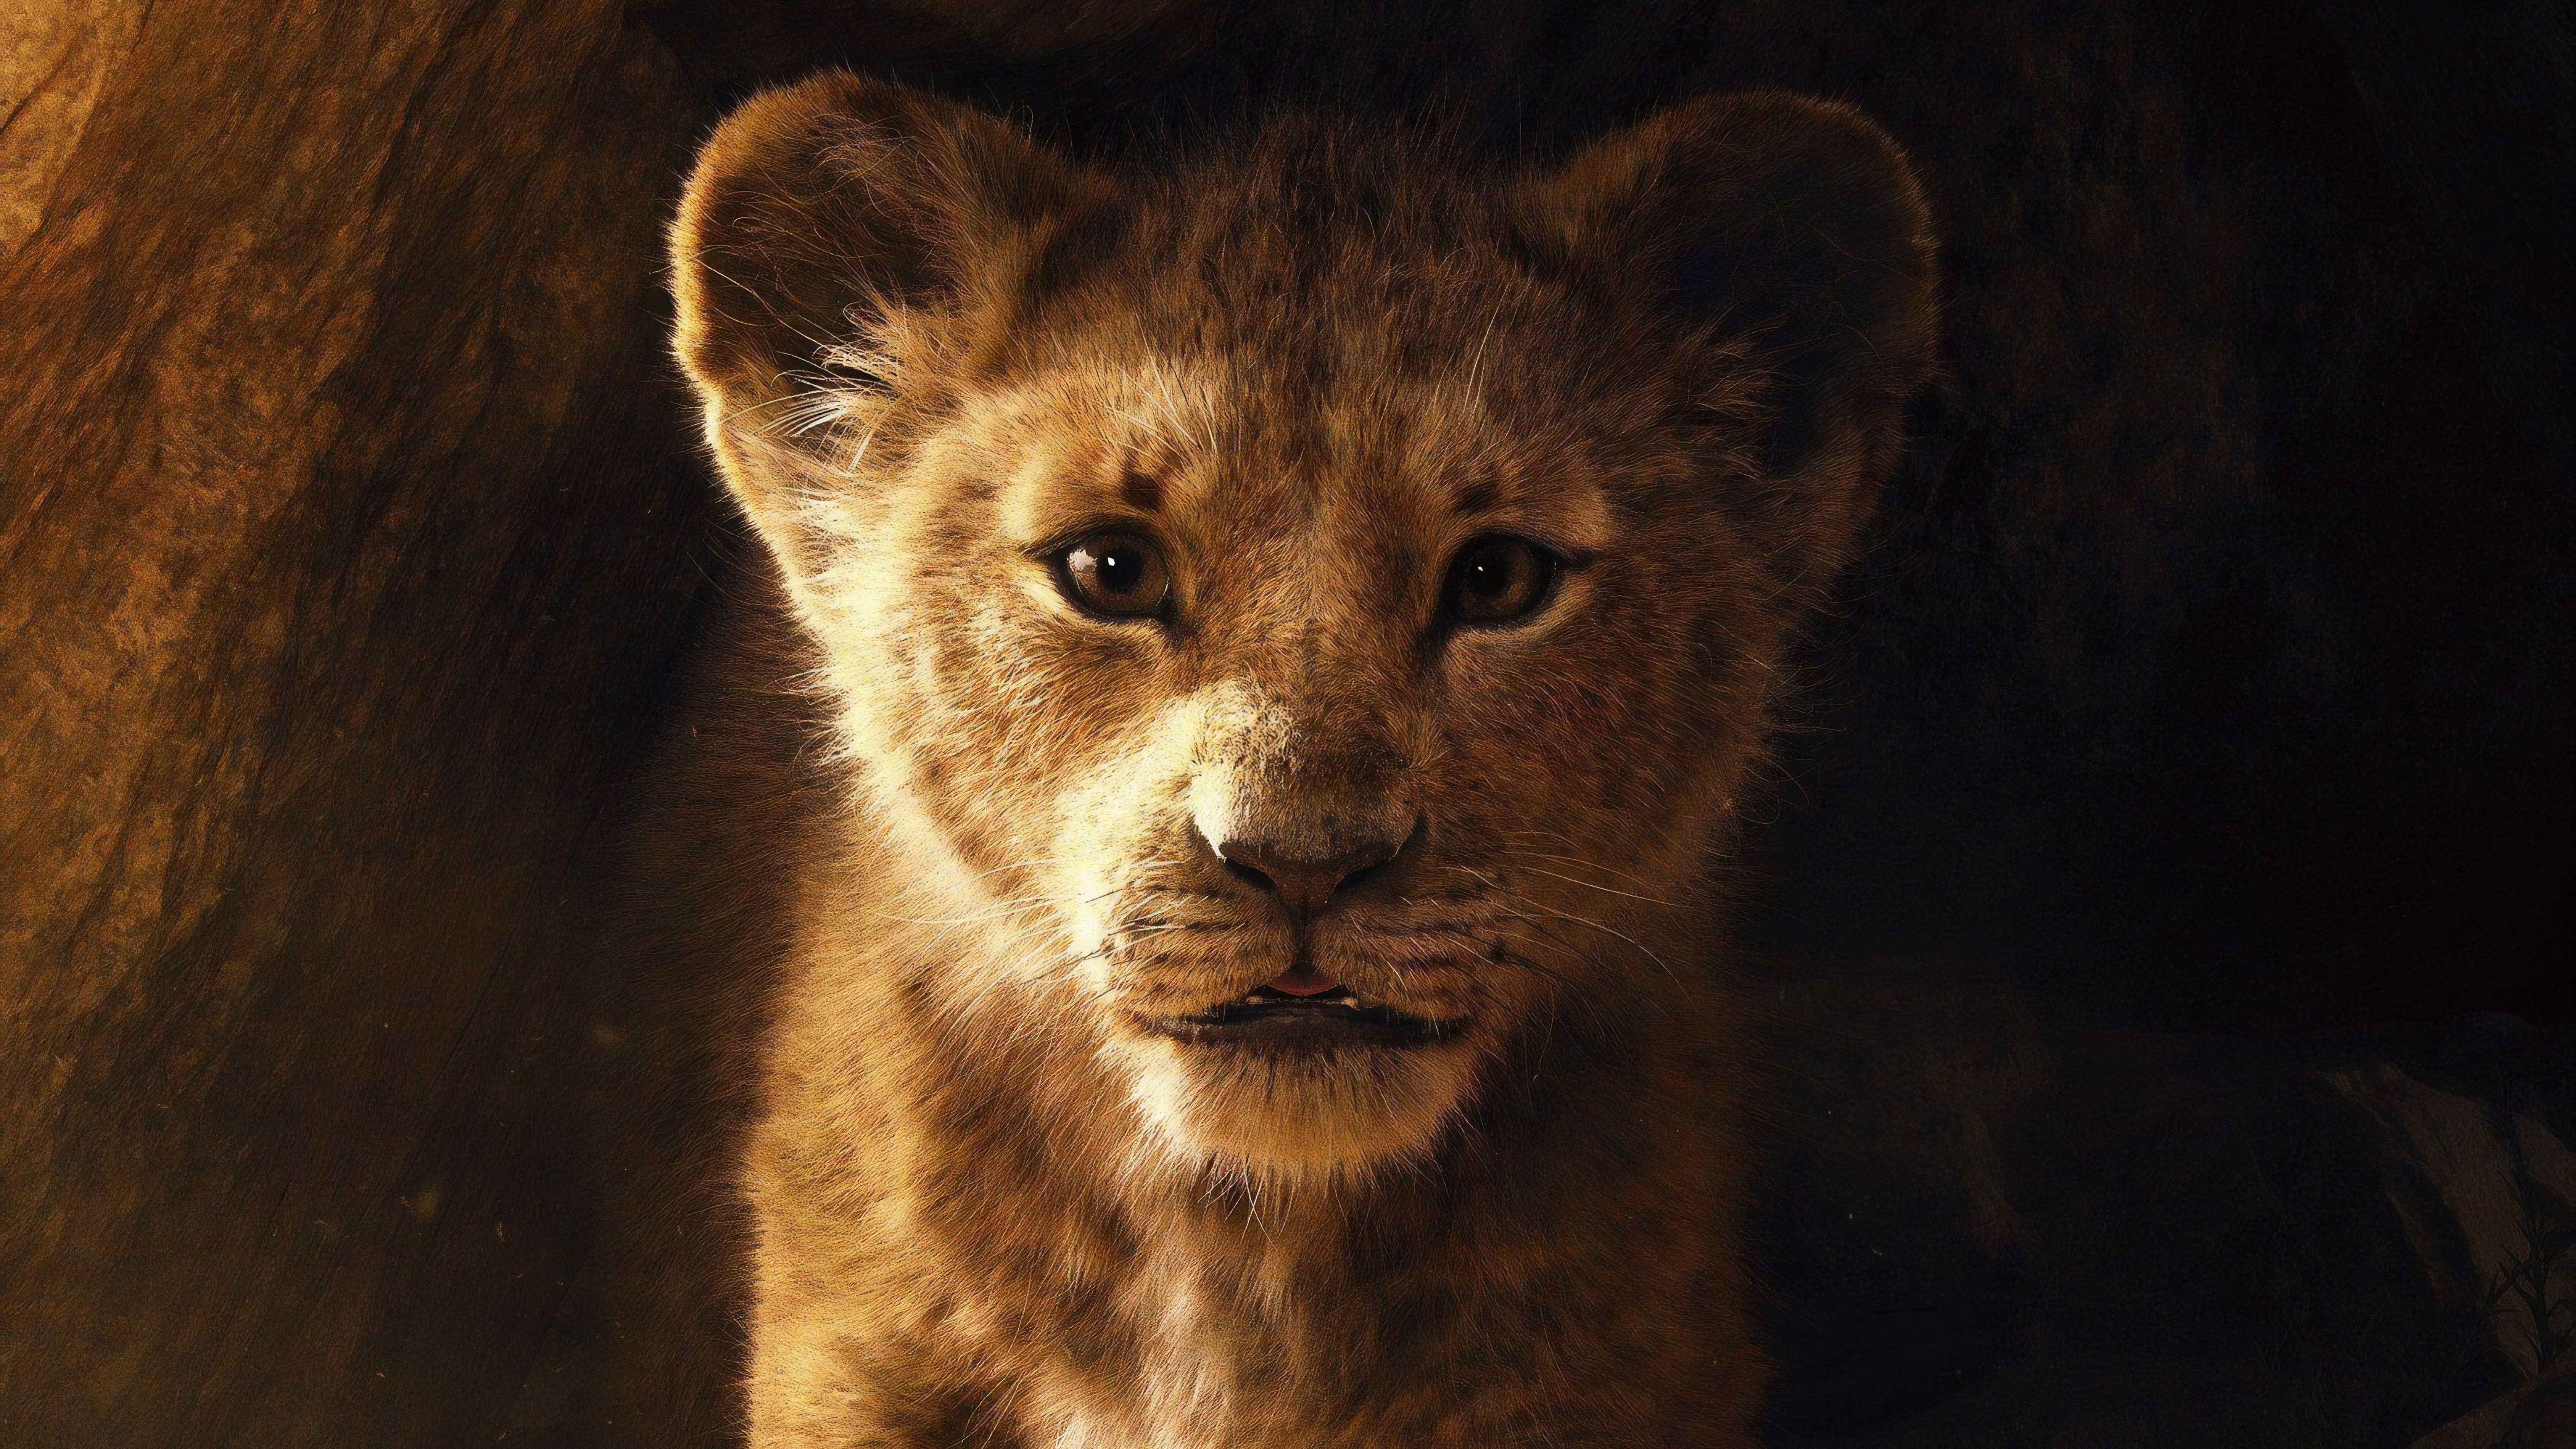 The Lion King 2019 5K